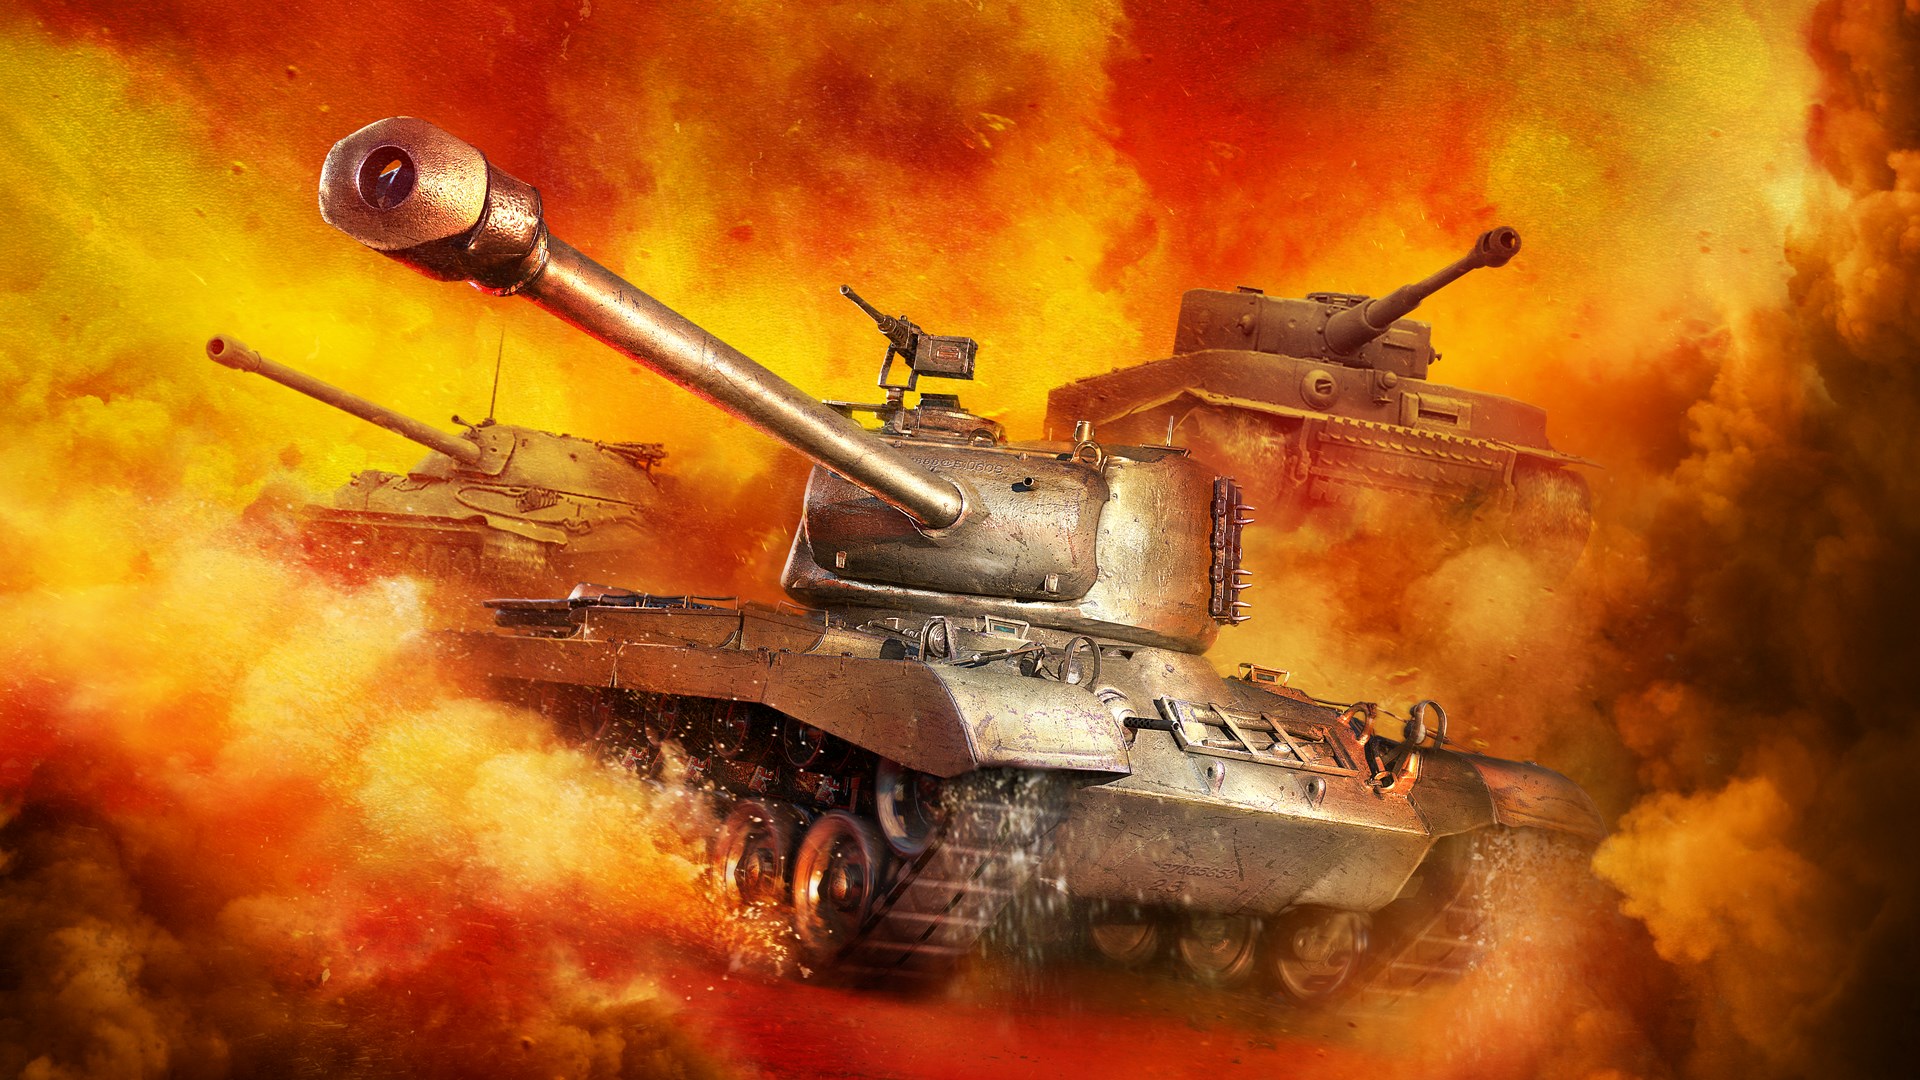 World of Tanks Pre-Download with Bonus Tank!